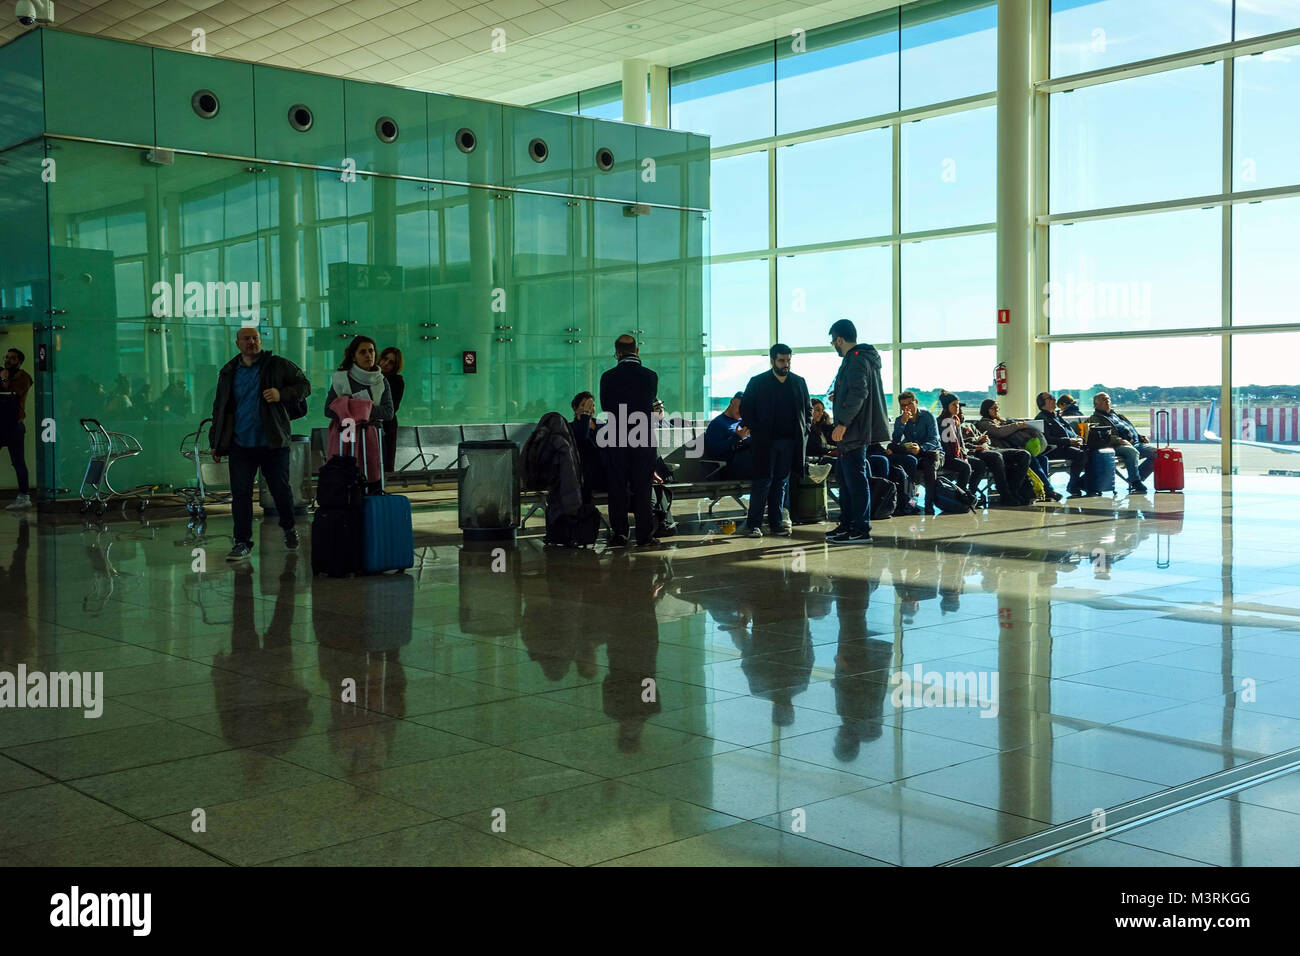 Barcelona El Prat airport with people queueing Stock Photo